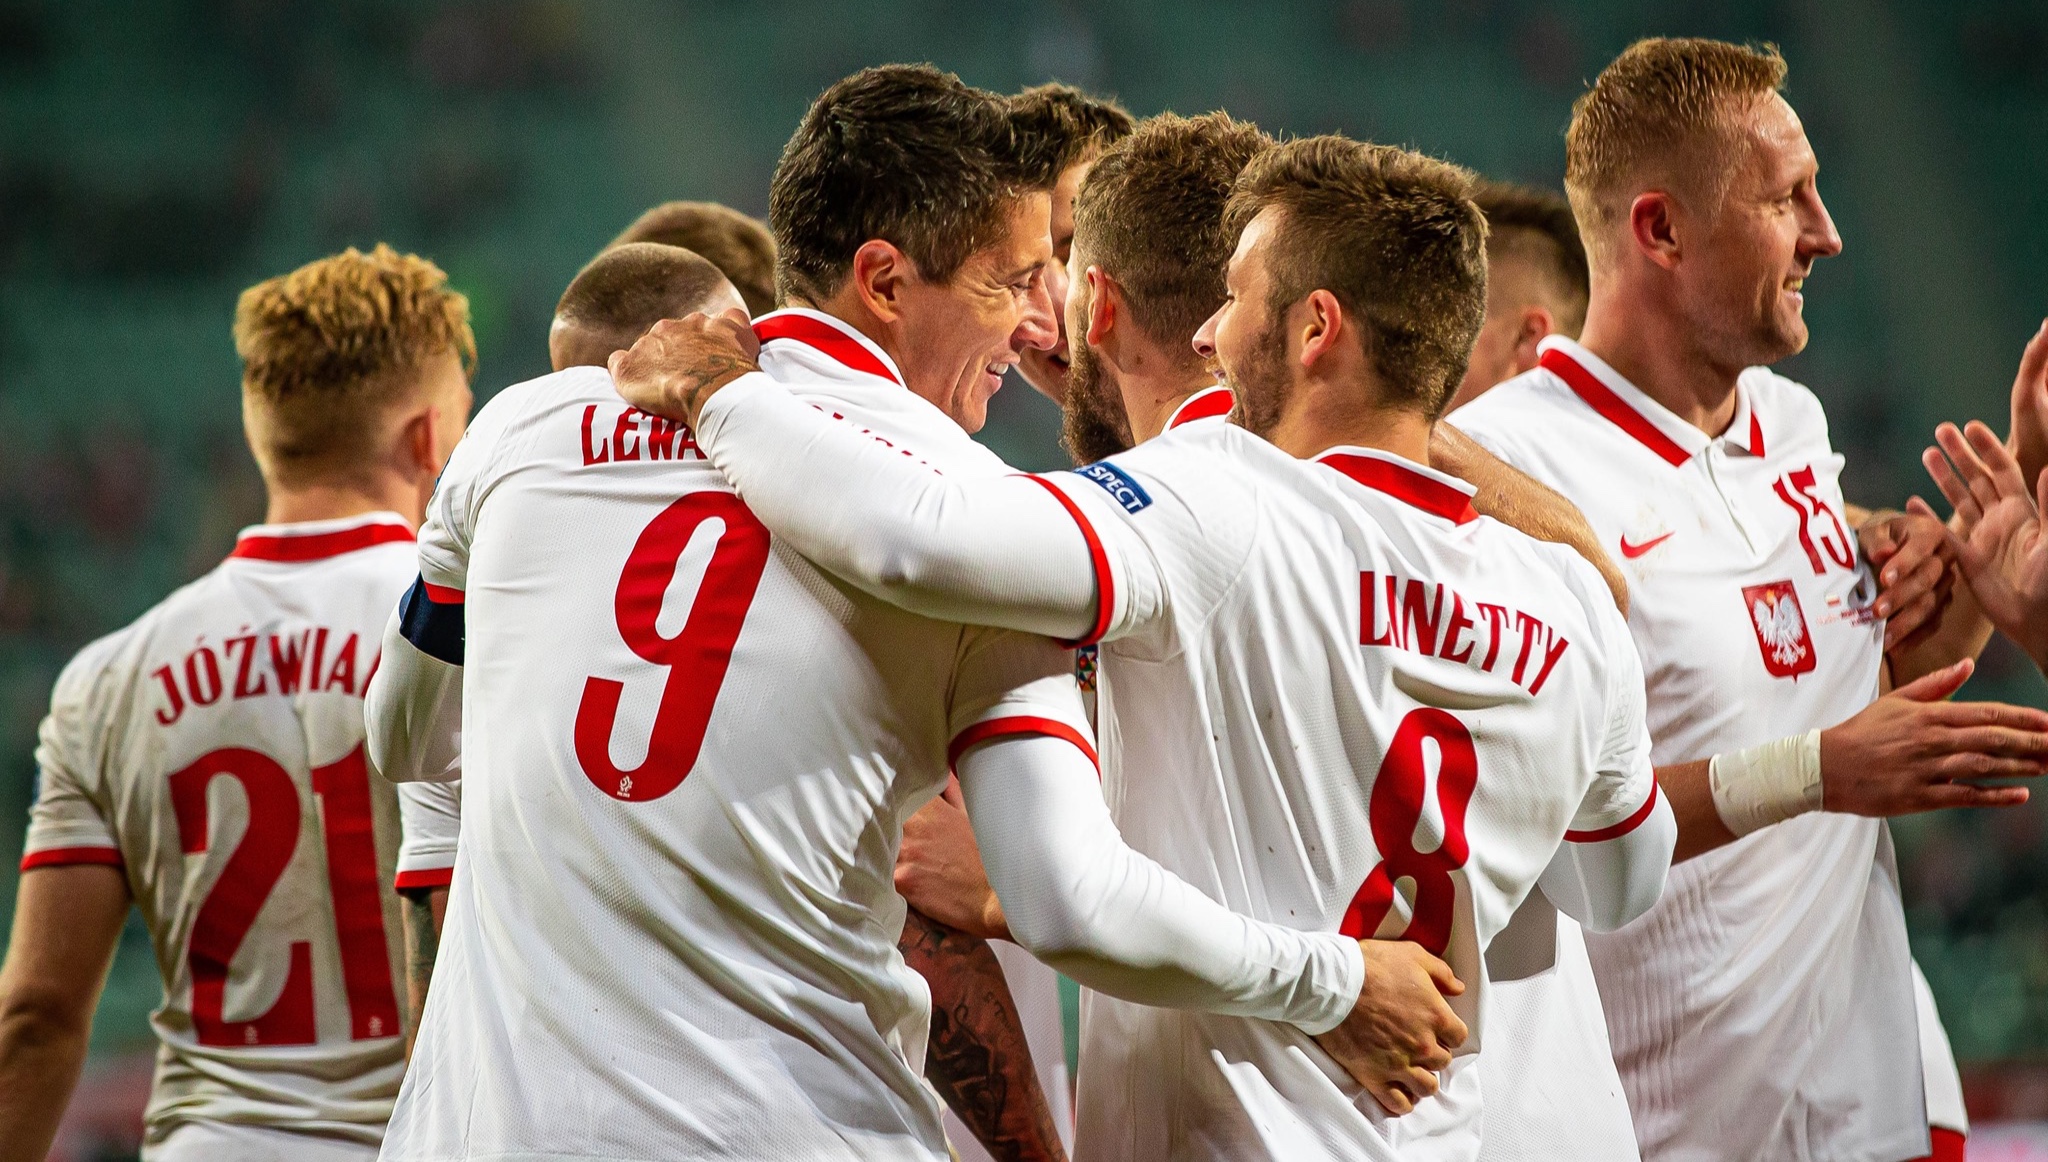 Poland won against Andorra 4:1